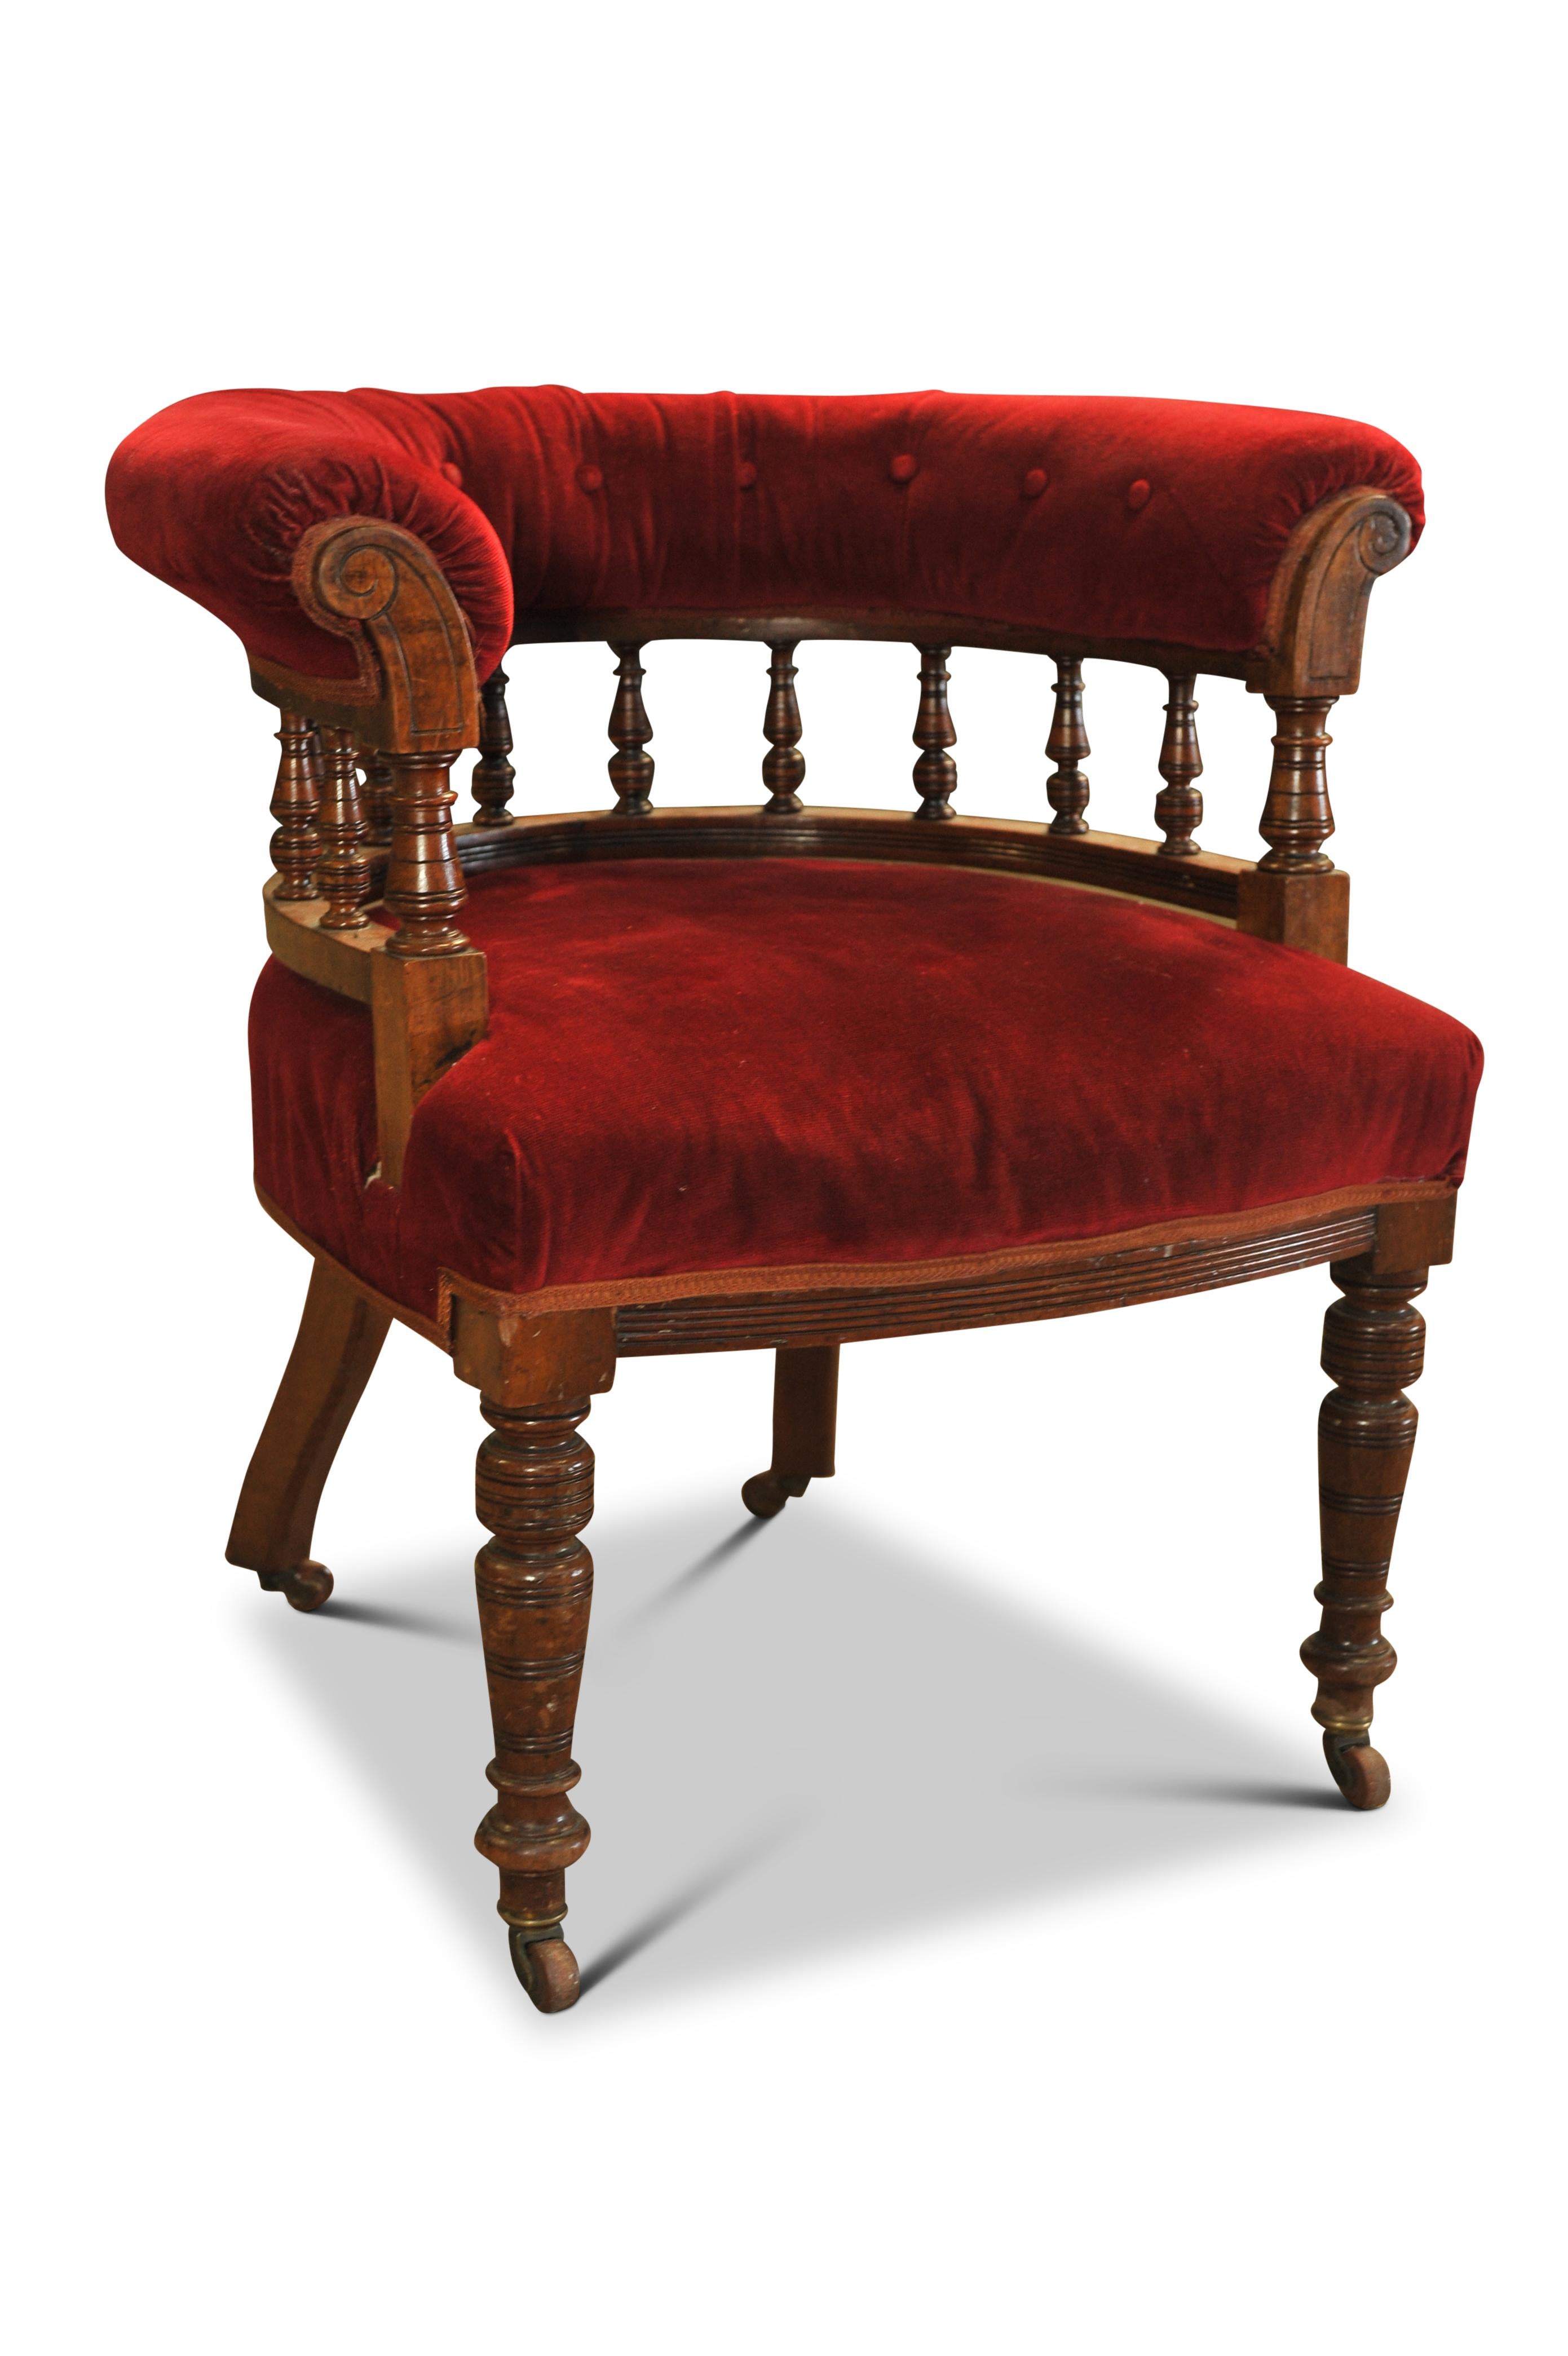 Victorian 19th Century Red Velvet Leather Buttonback Captains Chair With Porcelain Castors For Sale